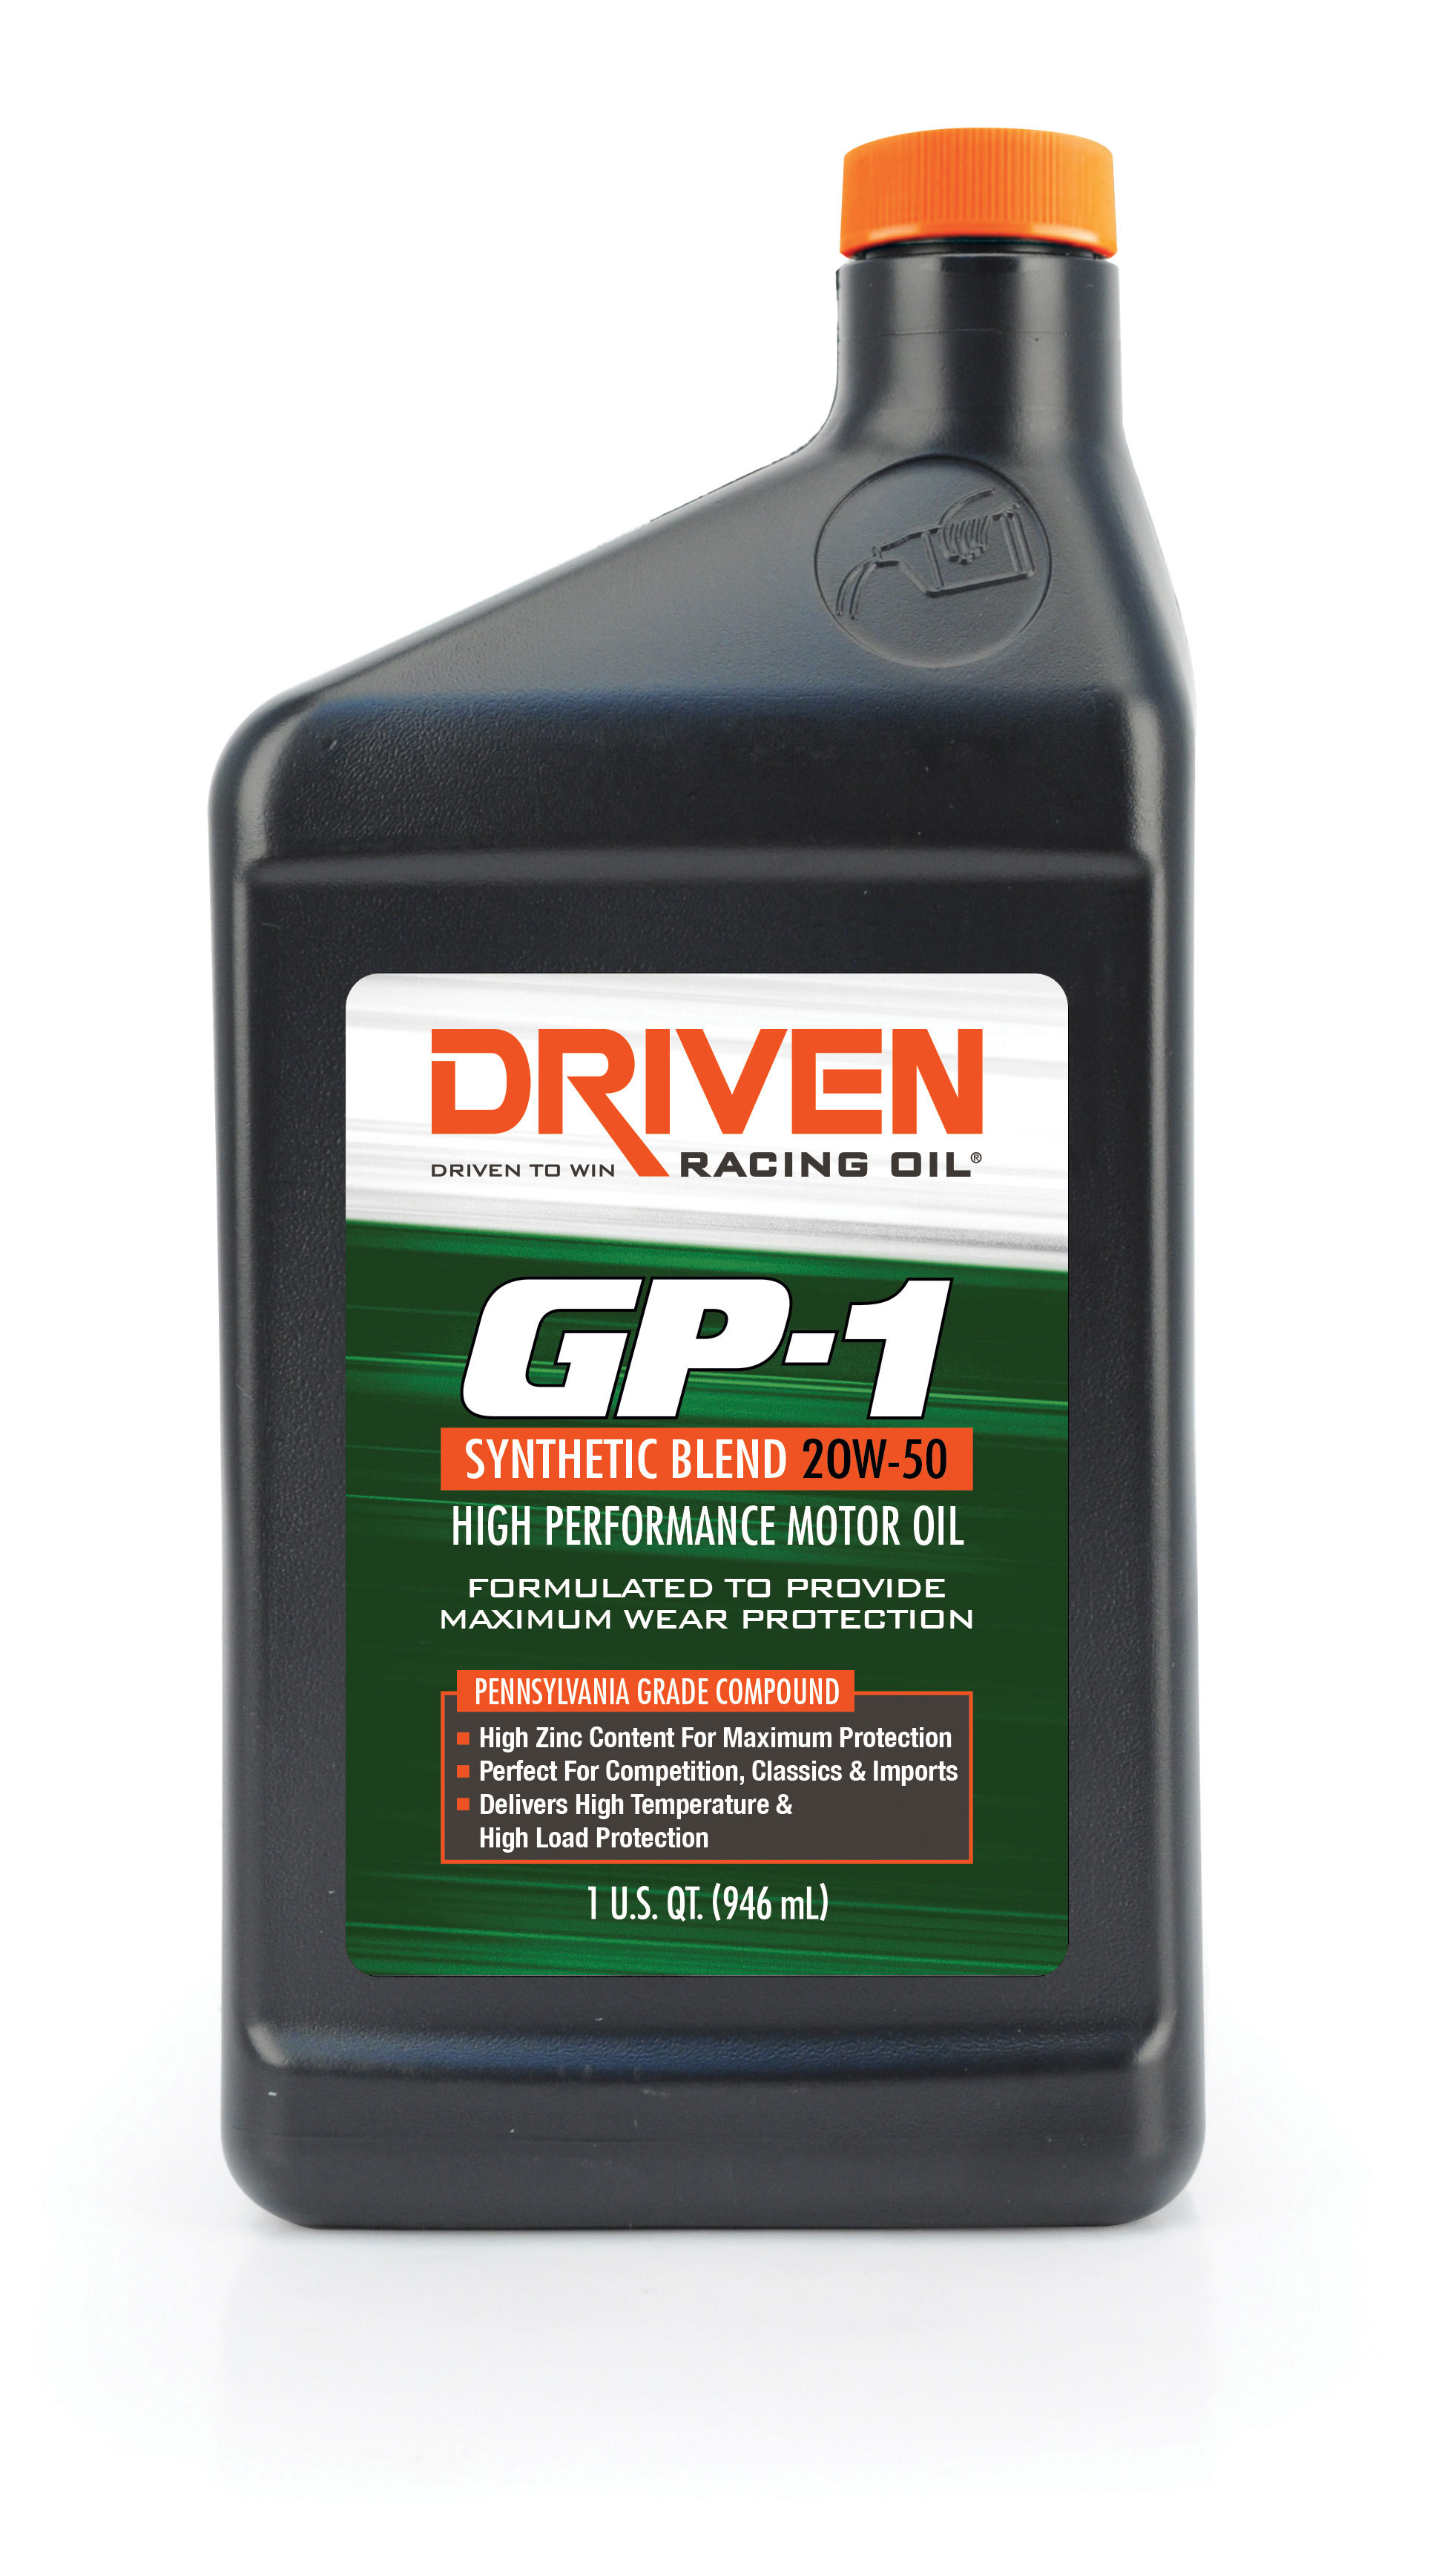 Driven GP1 20W-50 Synthetic Blend Racing Oil - 1 Quart Bottle 19506